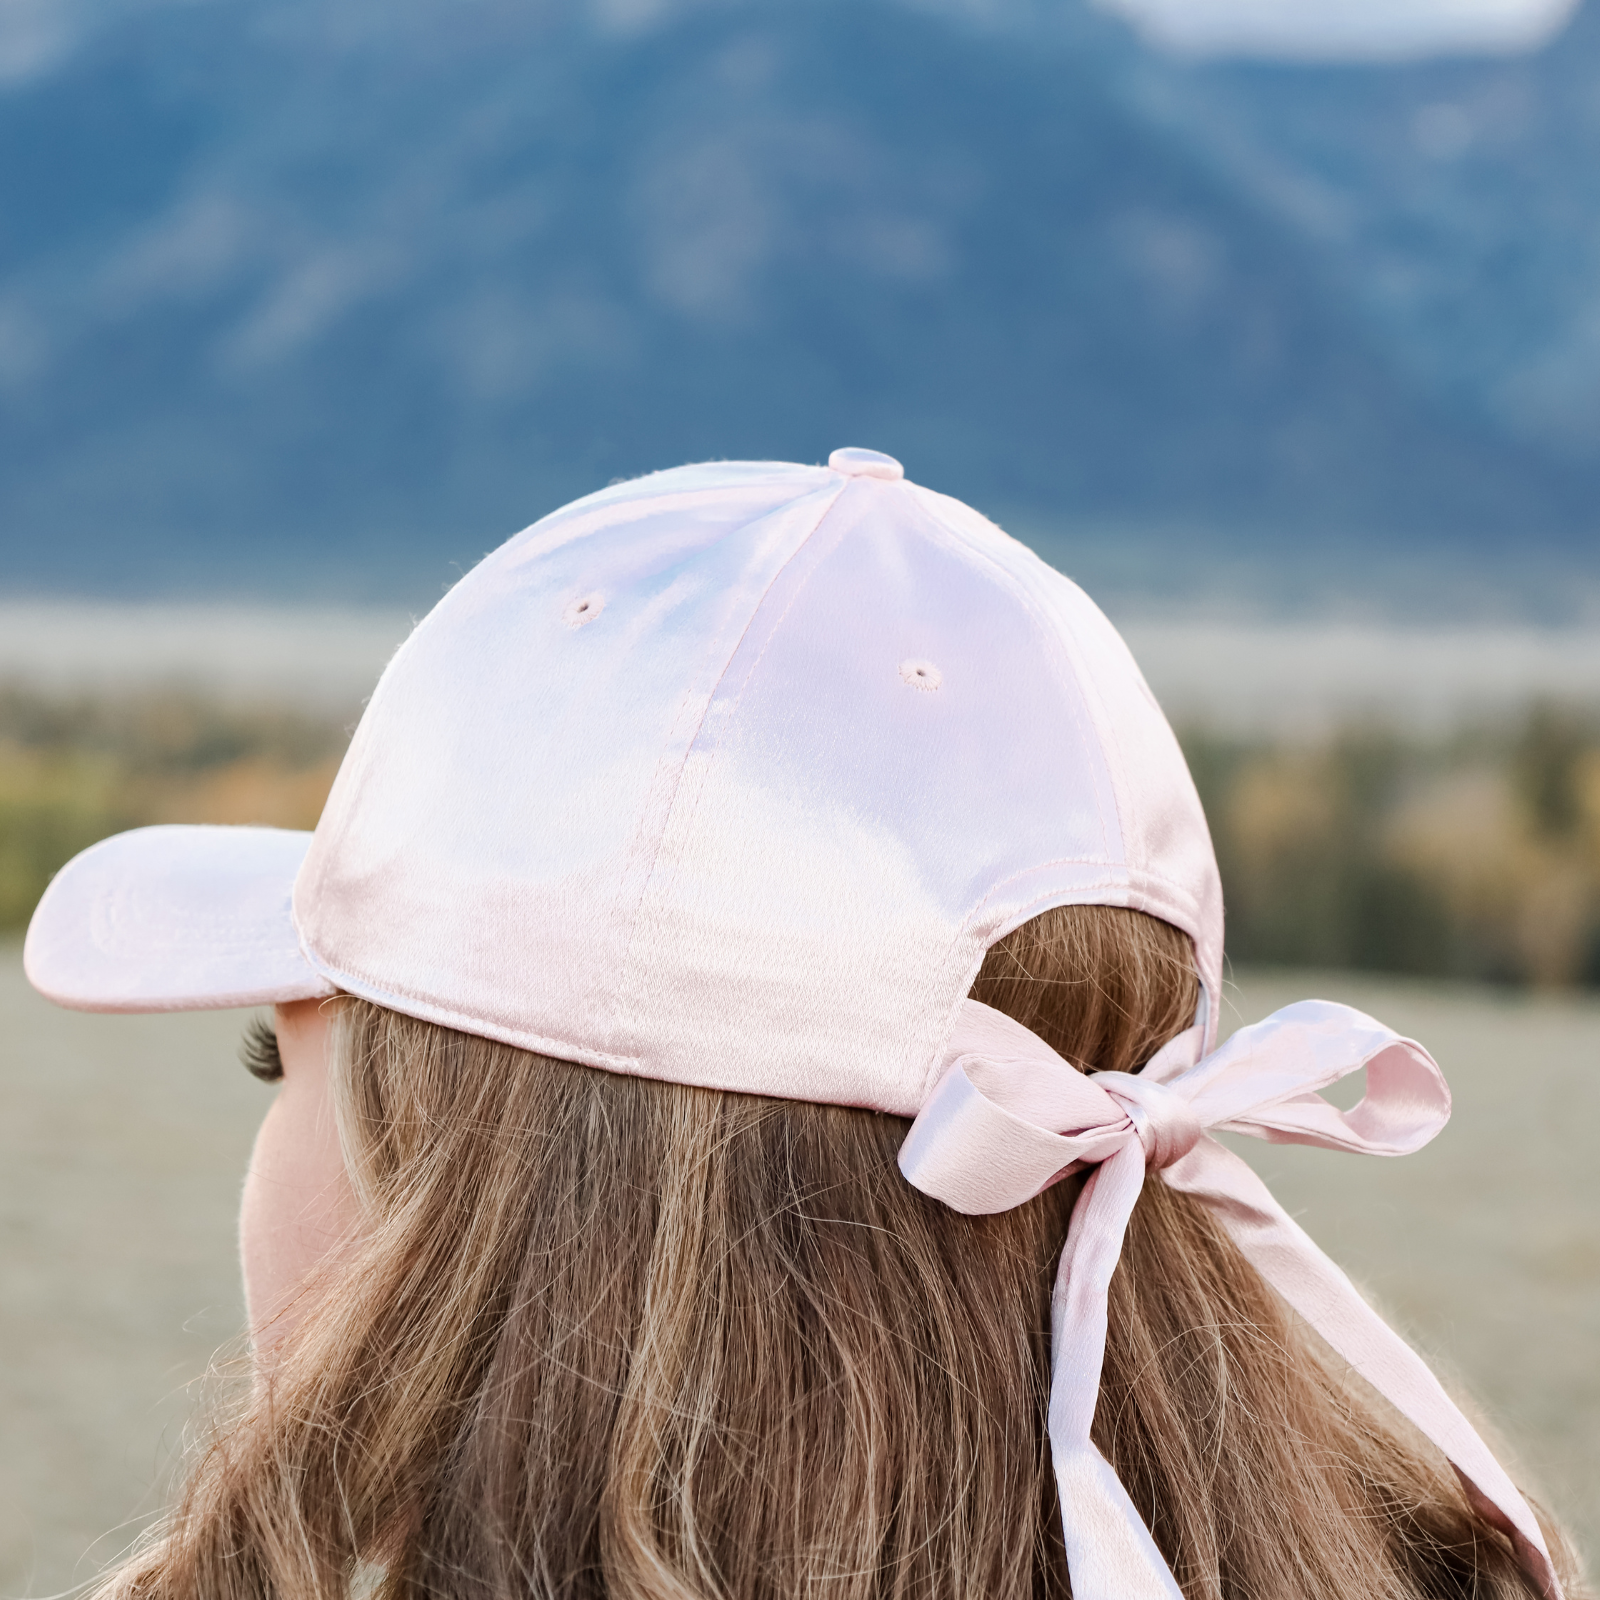 Chic-Fit Trendy Adjustable Women's Cap: Stylish Trucker Hats